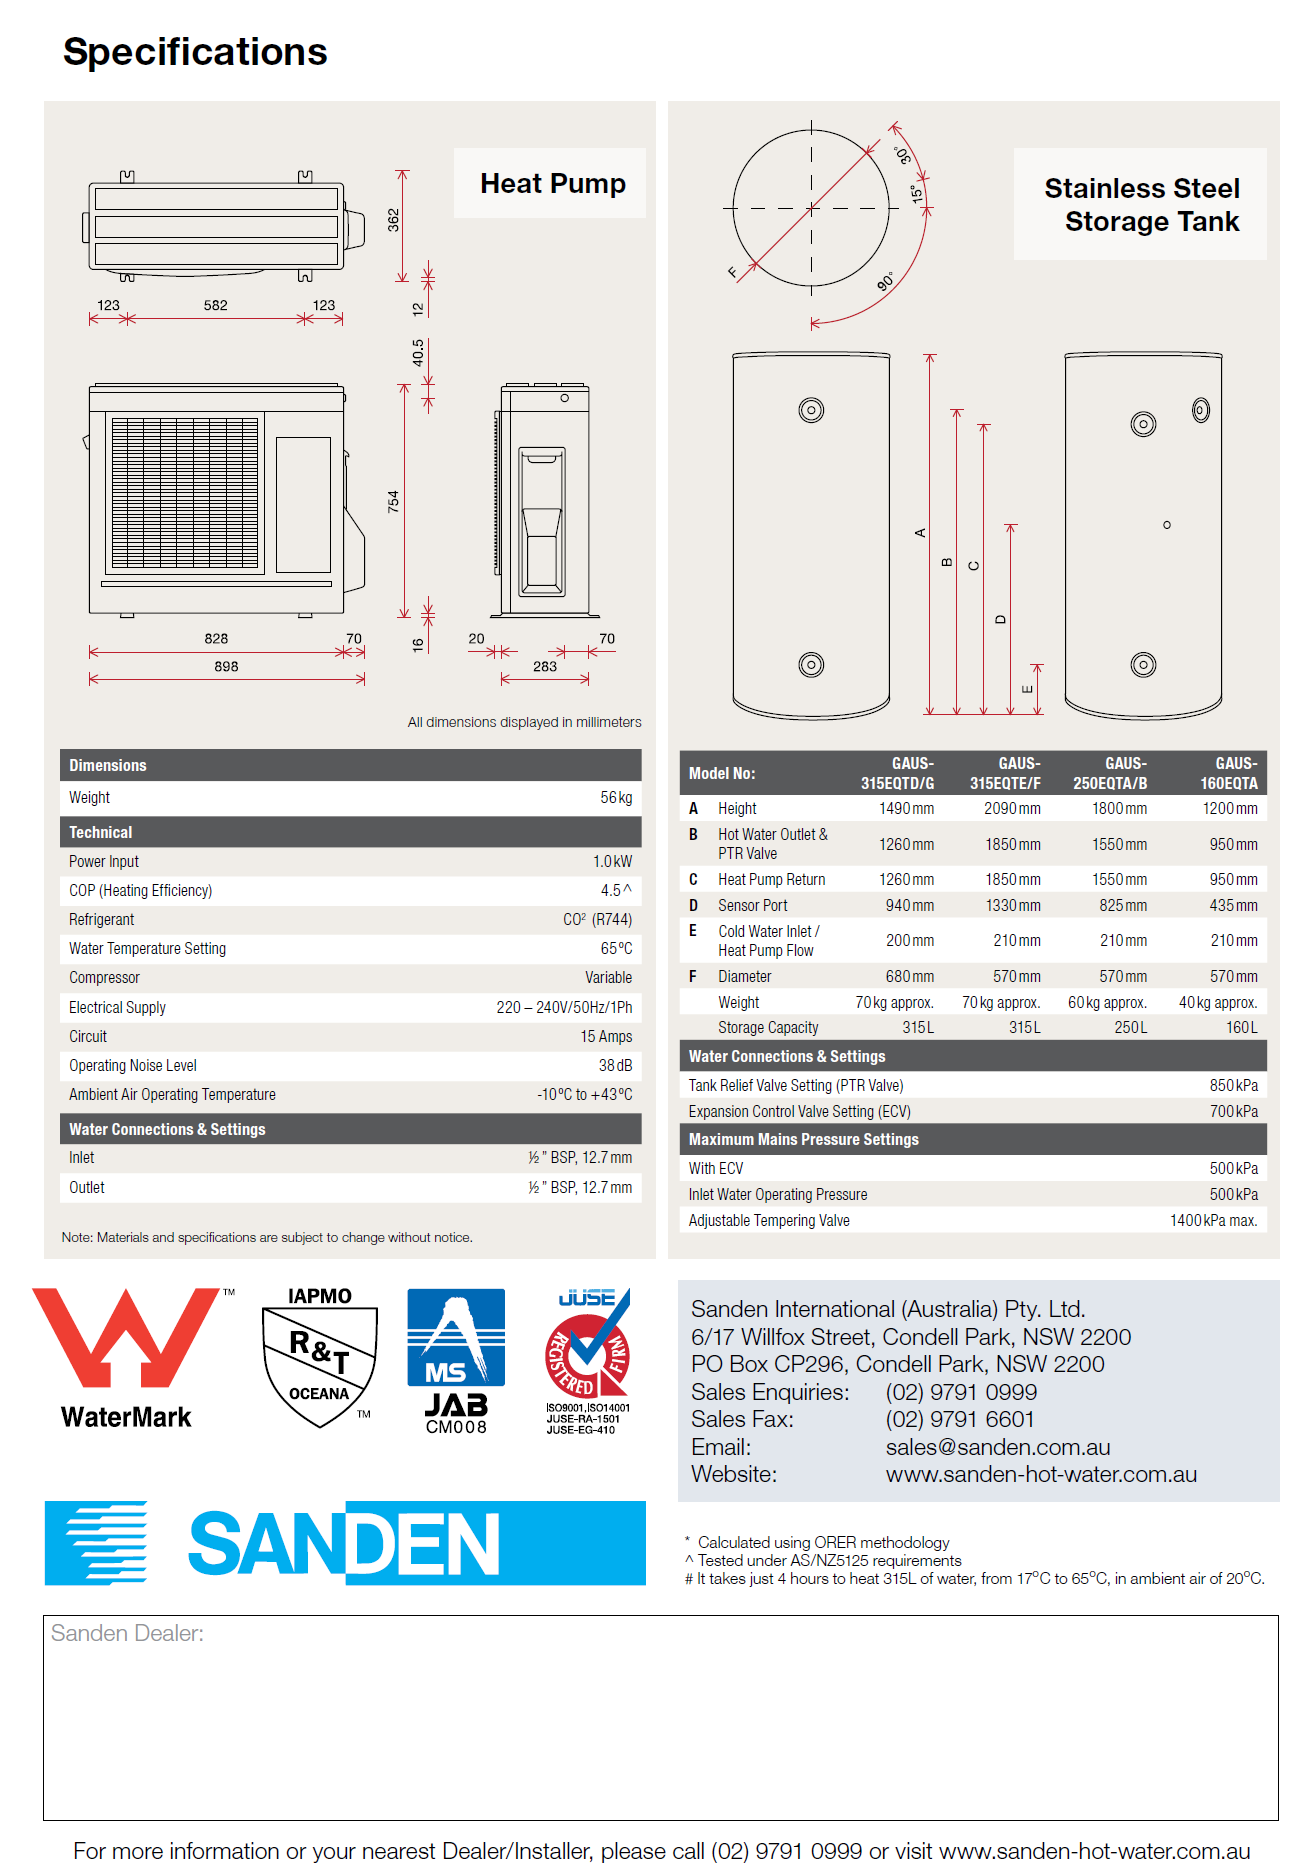 Sanden Heat Pump G2 Specifications from Brochure